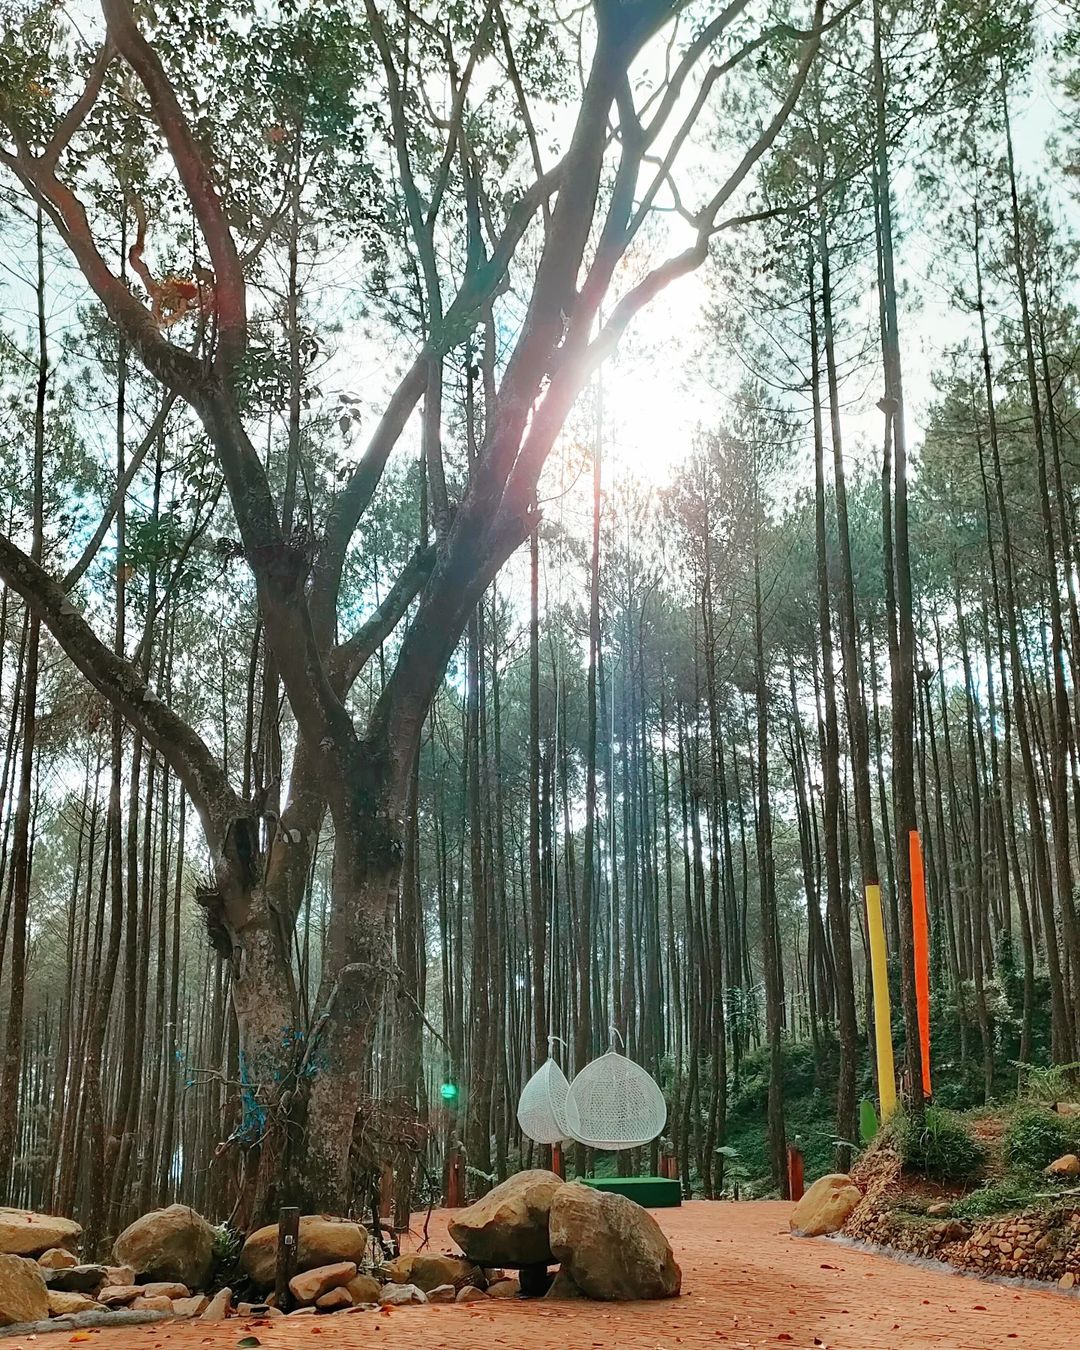 Jam Buka Pinea Forest Mangli Image From @sinta_ika